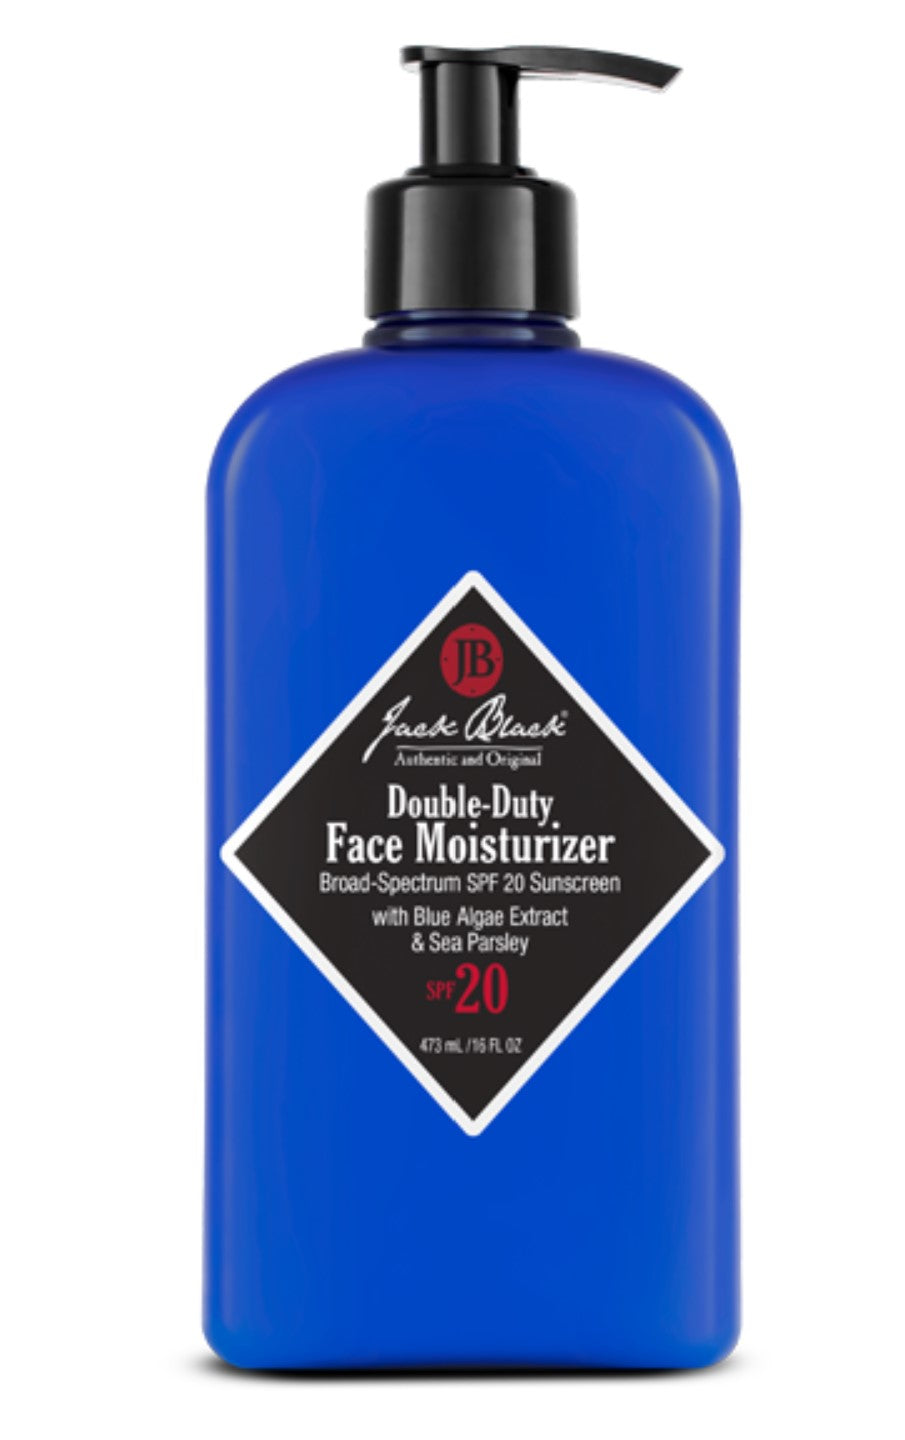 Jack Black Limited Edition Double-Duty Face Moisturizer Save 50%!